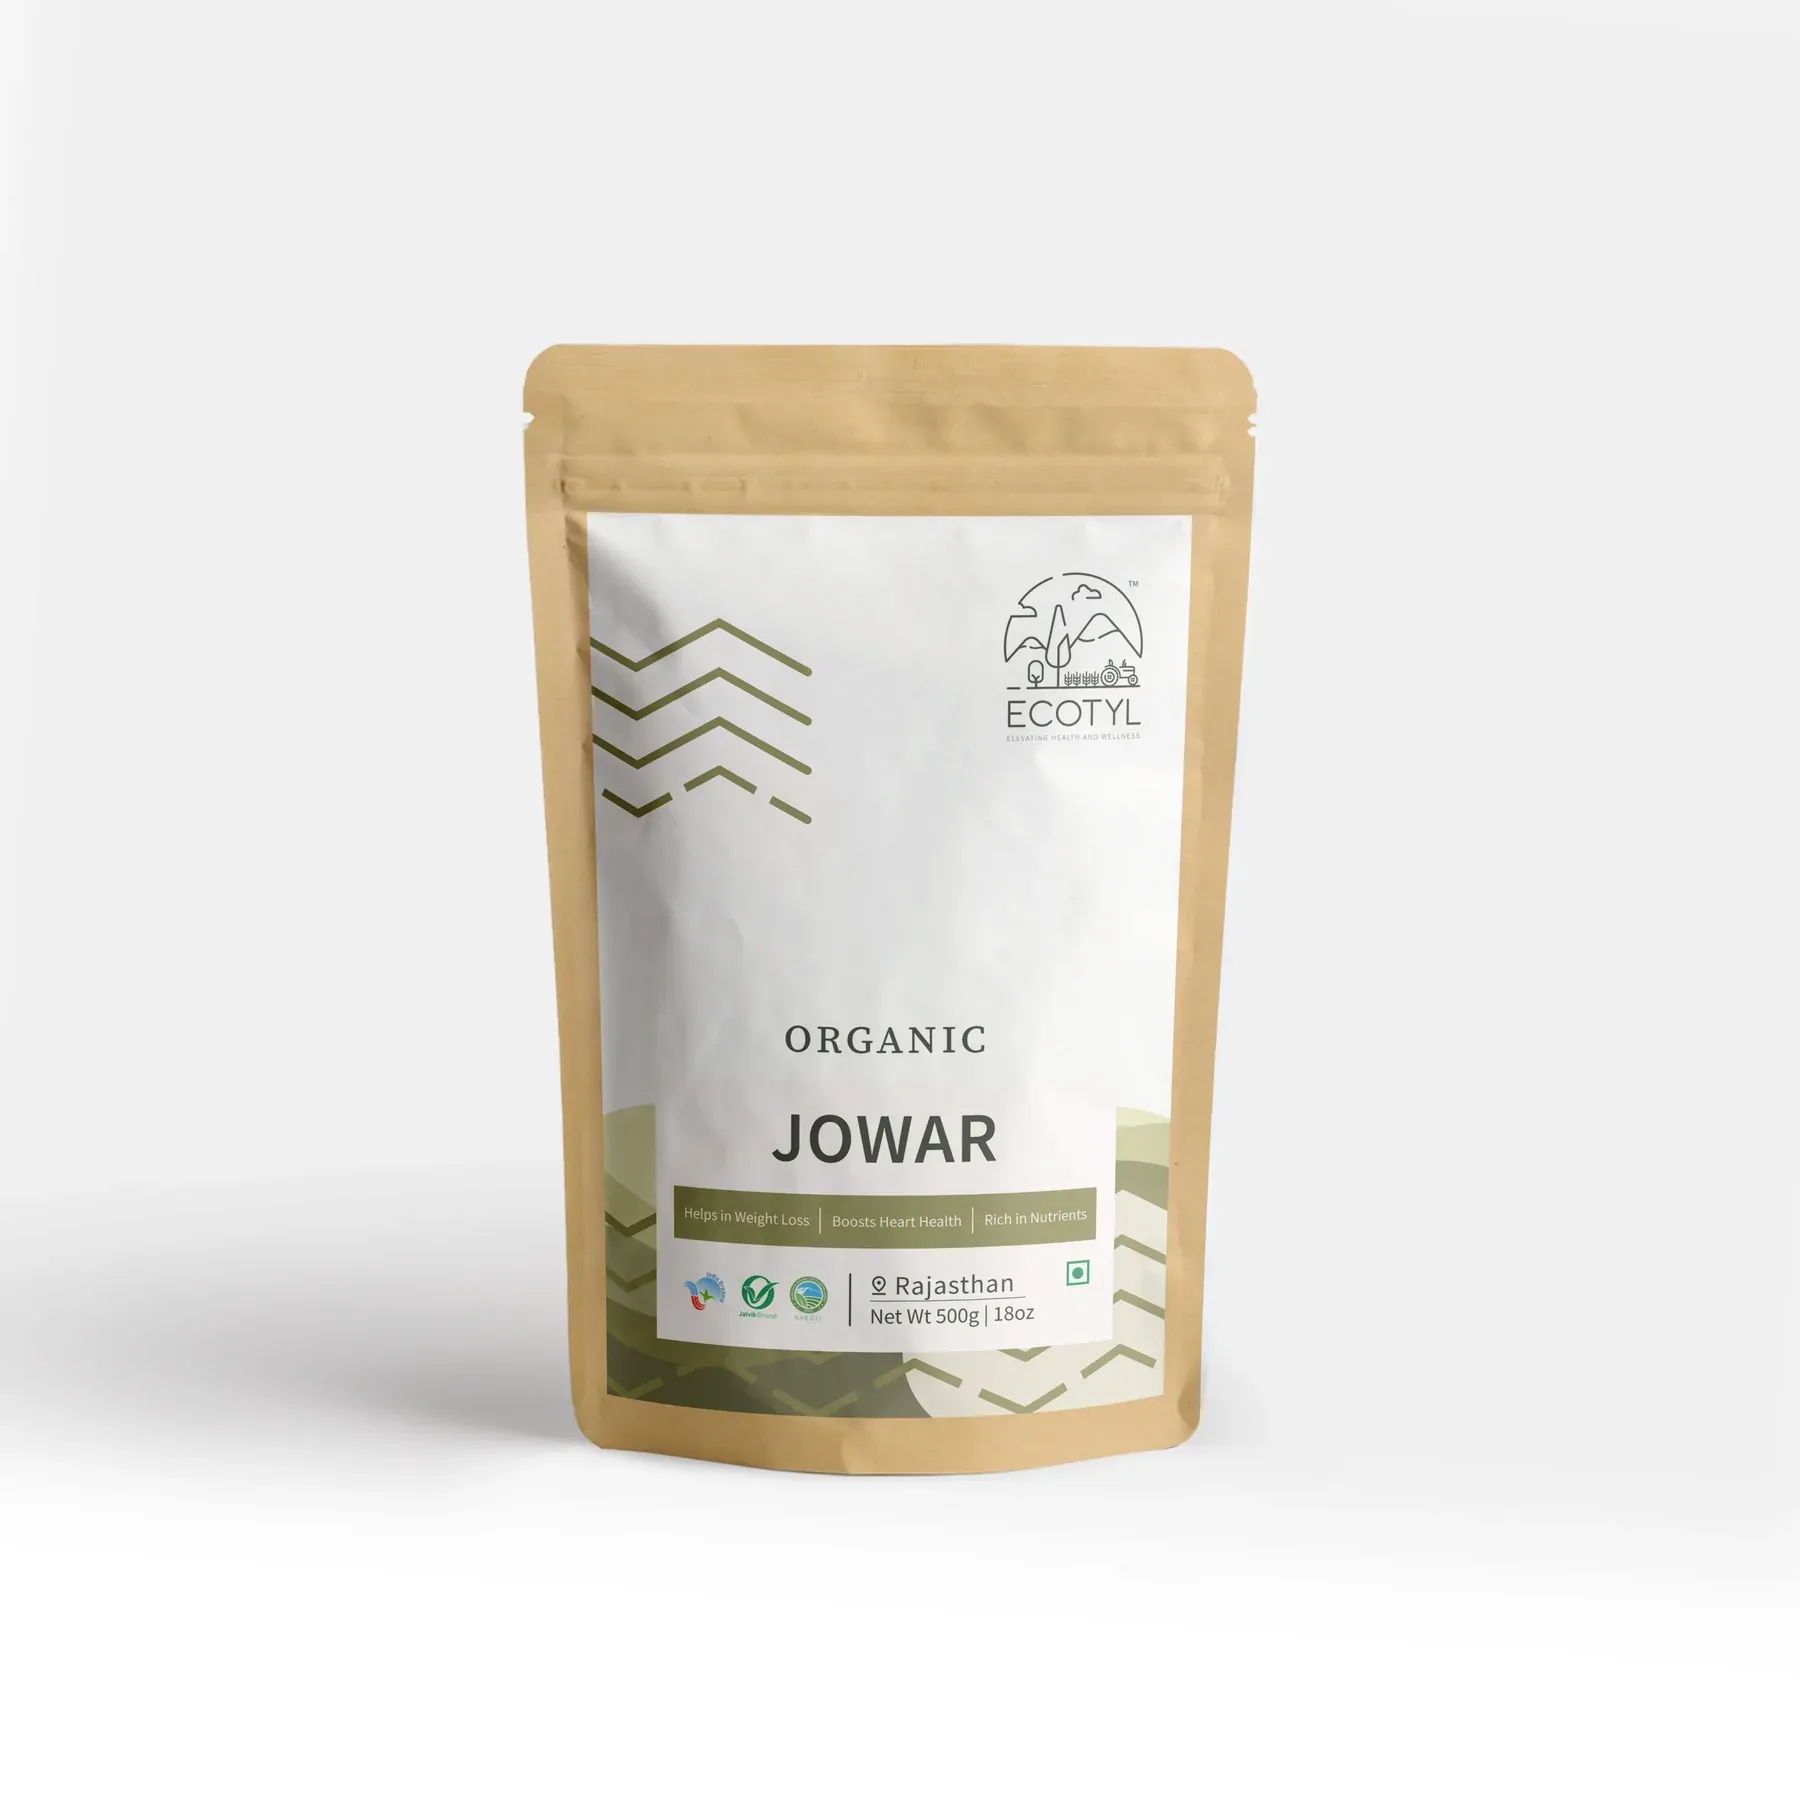 Ecotyl Organic Jowar Image